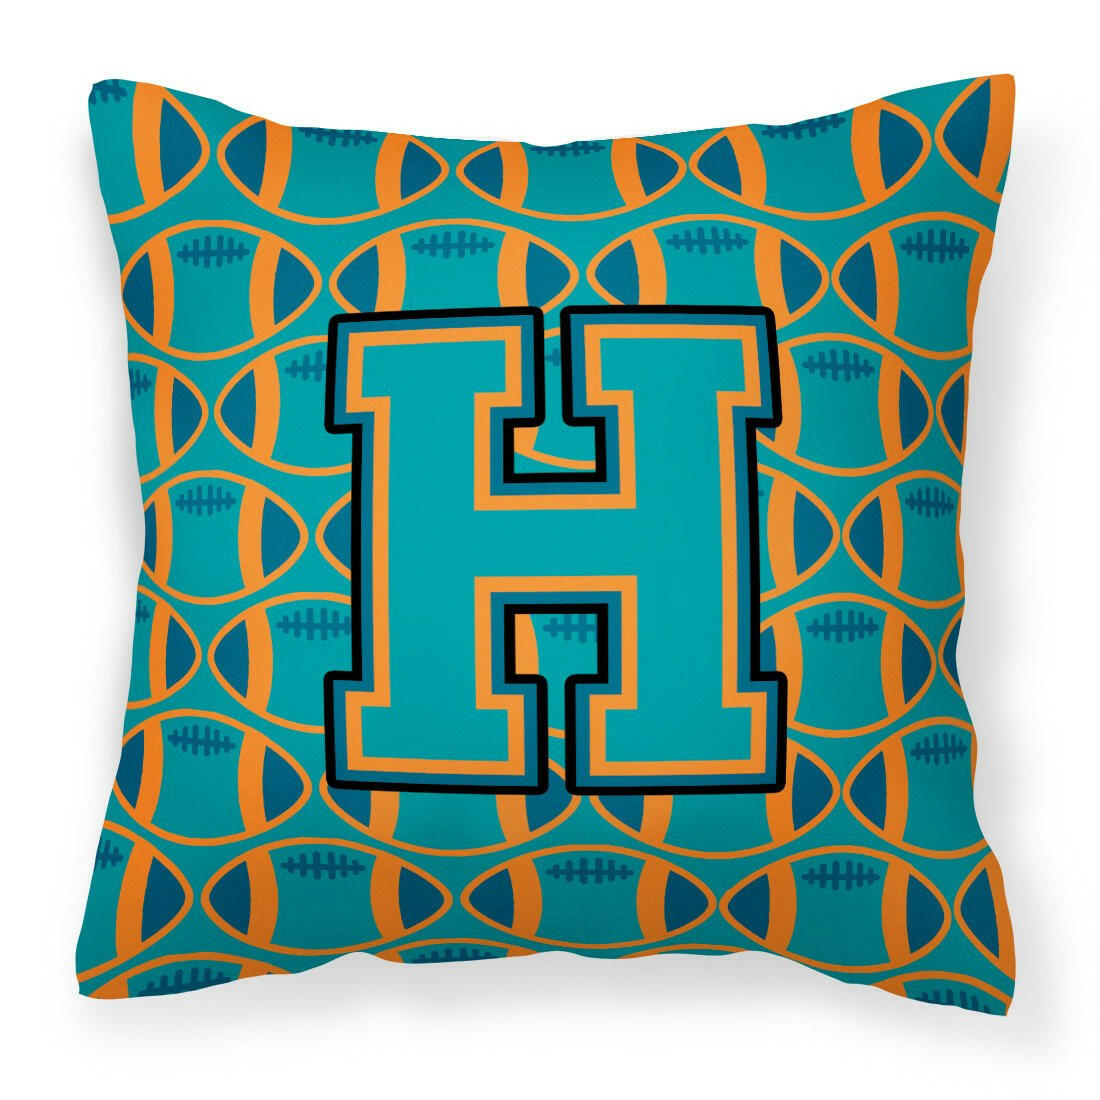 Letter H Football Aqua, Orange and Marine Blue Fabric Decorative Pillow CJ1063-HPW1414 by Caroline's Treasures